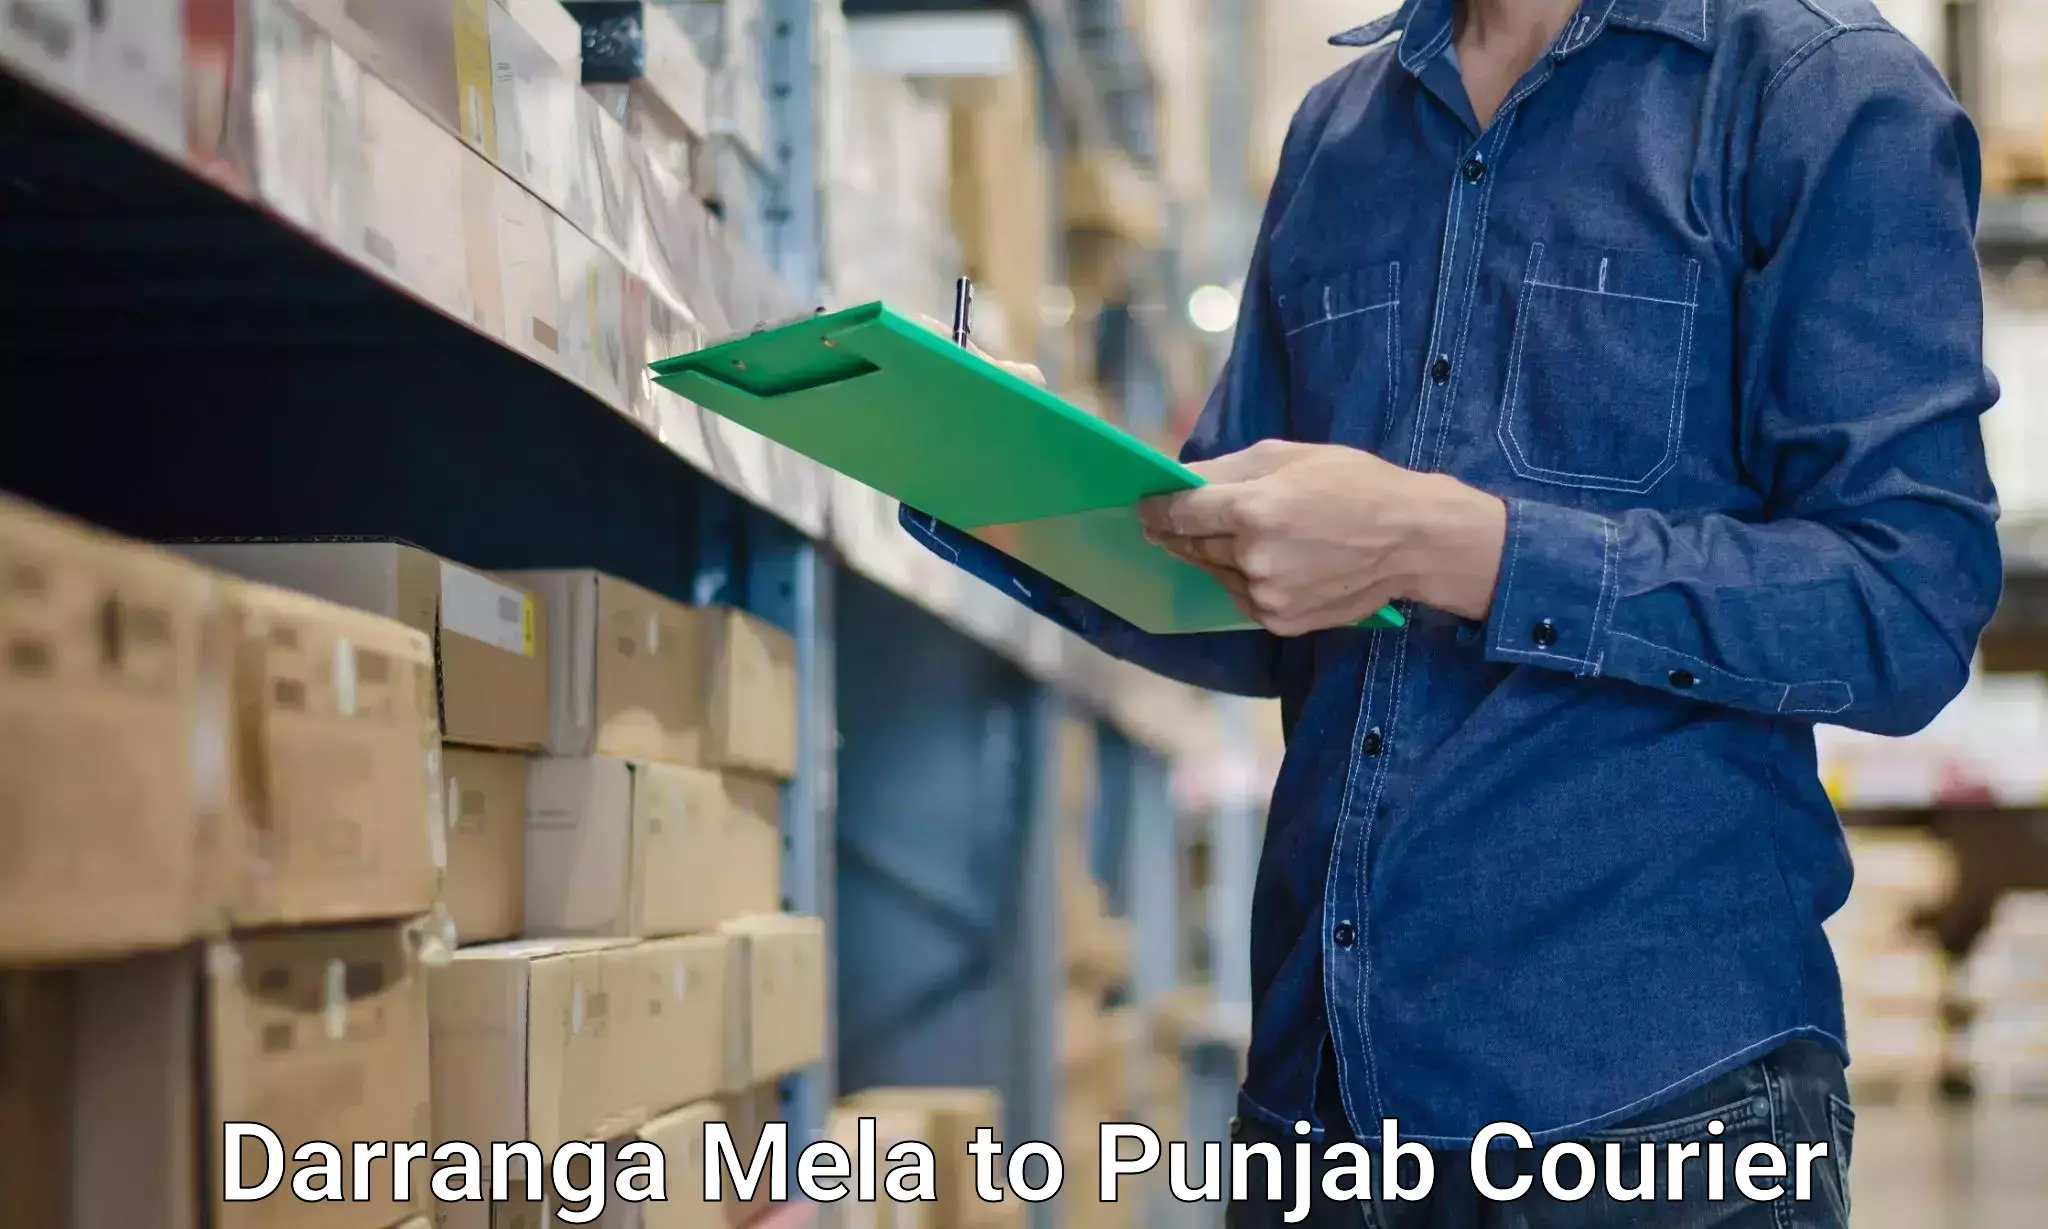 Professional packing services Darranga Mela to Punjab